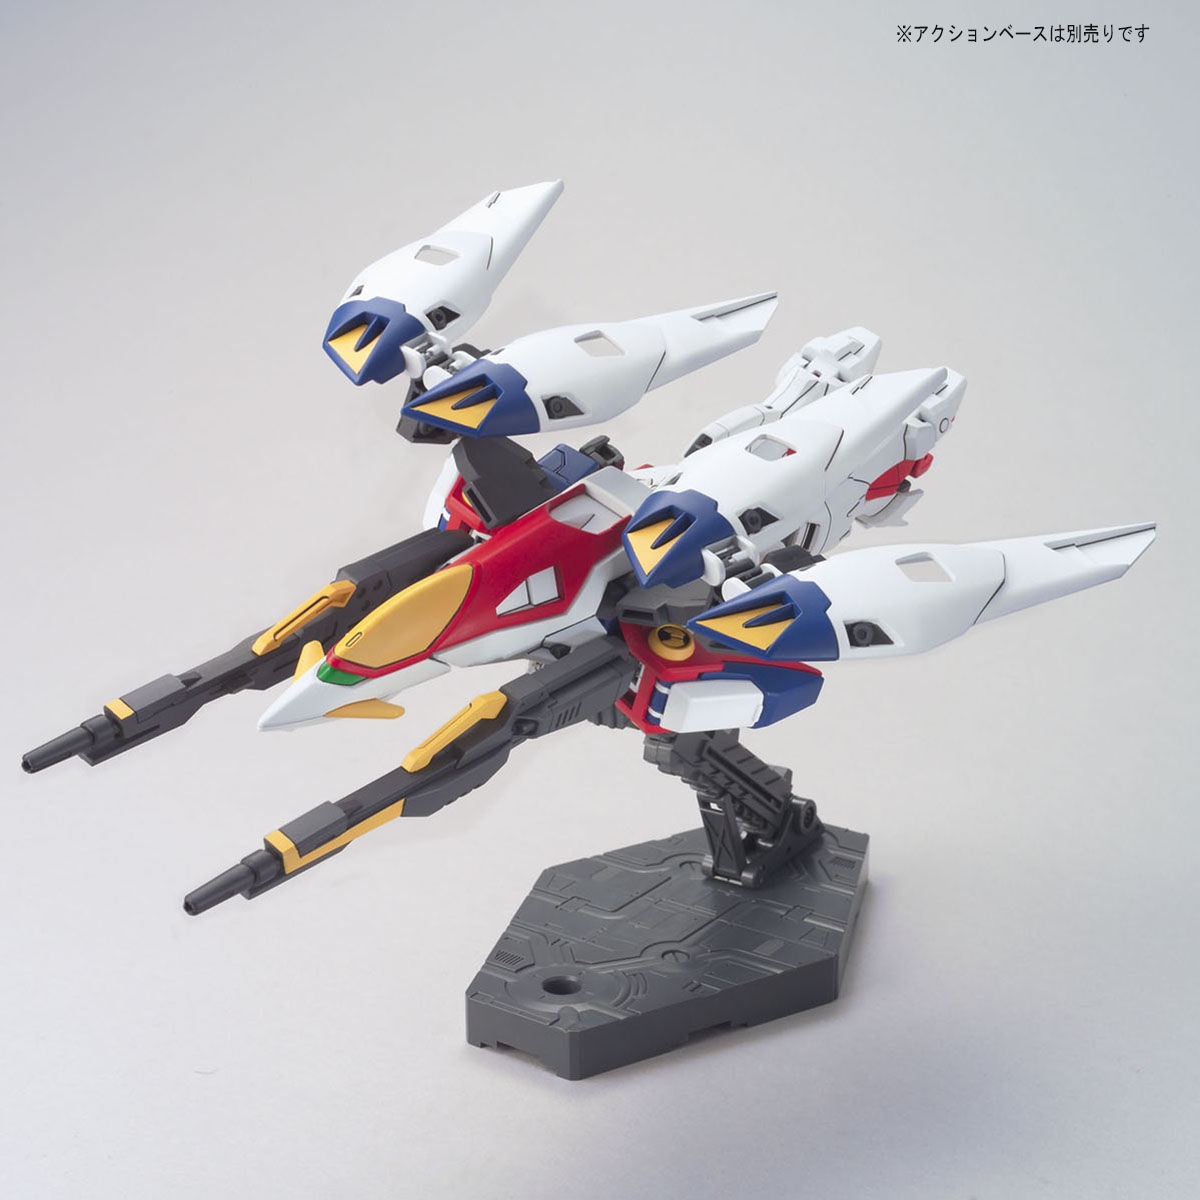 Maquette Gundam - Wing Gundam Zero Gunpla HG 1/144 13cm BANDAI Pas Cher 